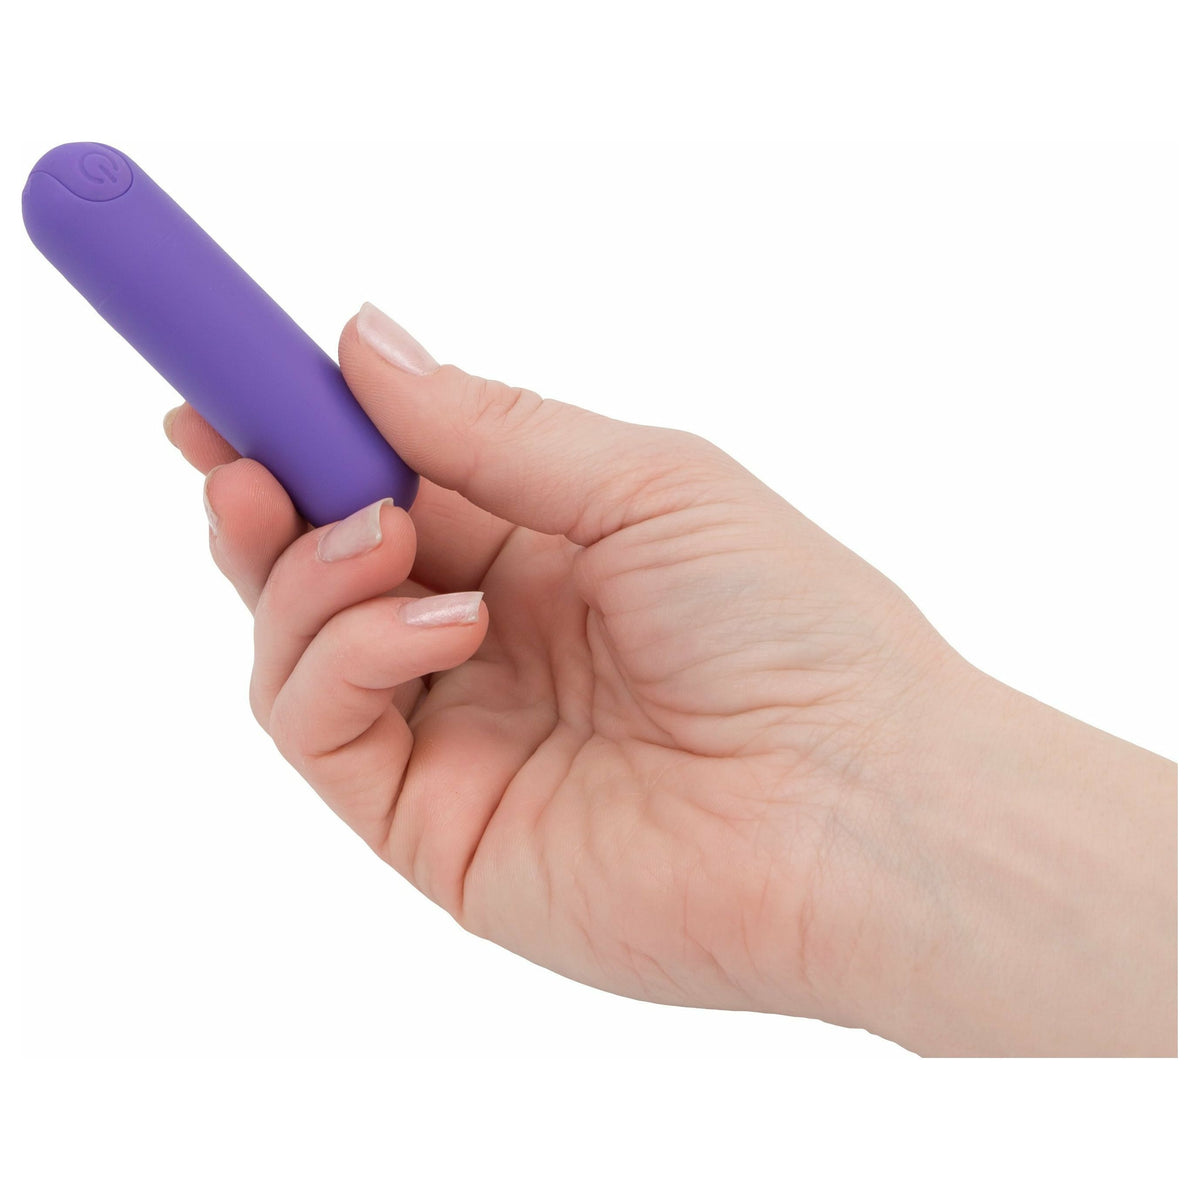 PowerBullet Essential Vibrating Bullet - Purple